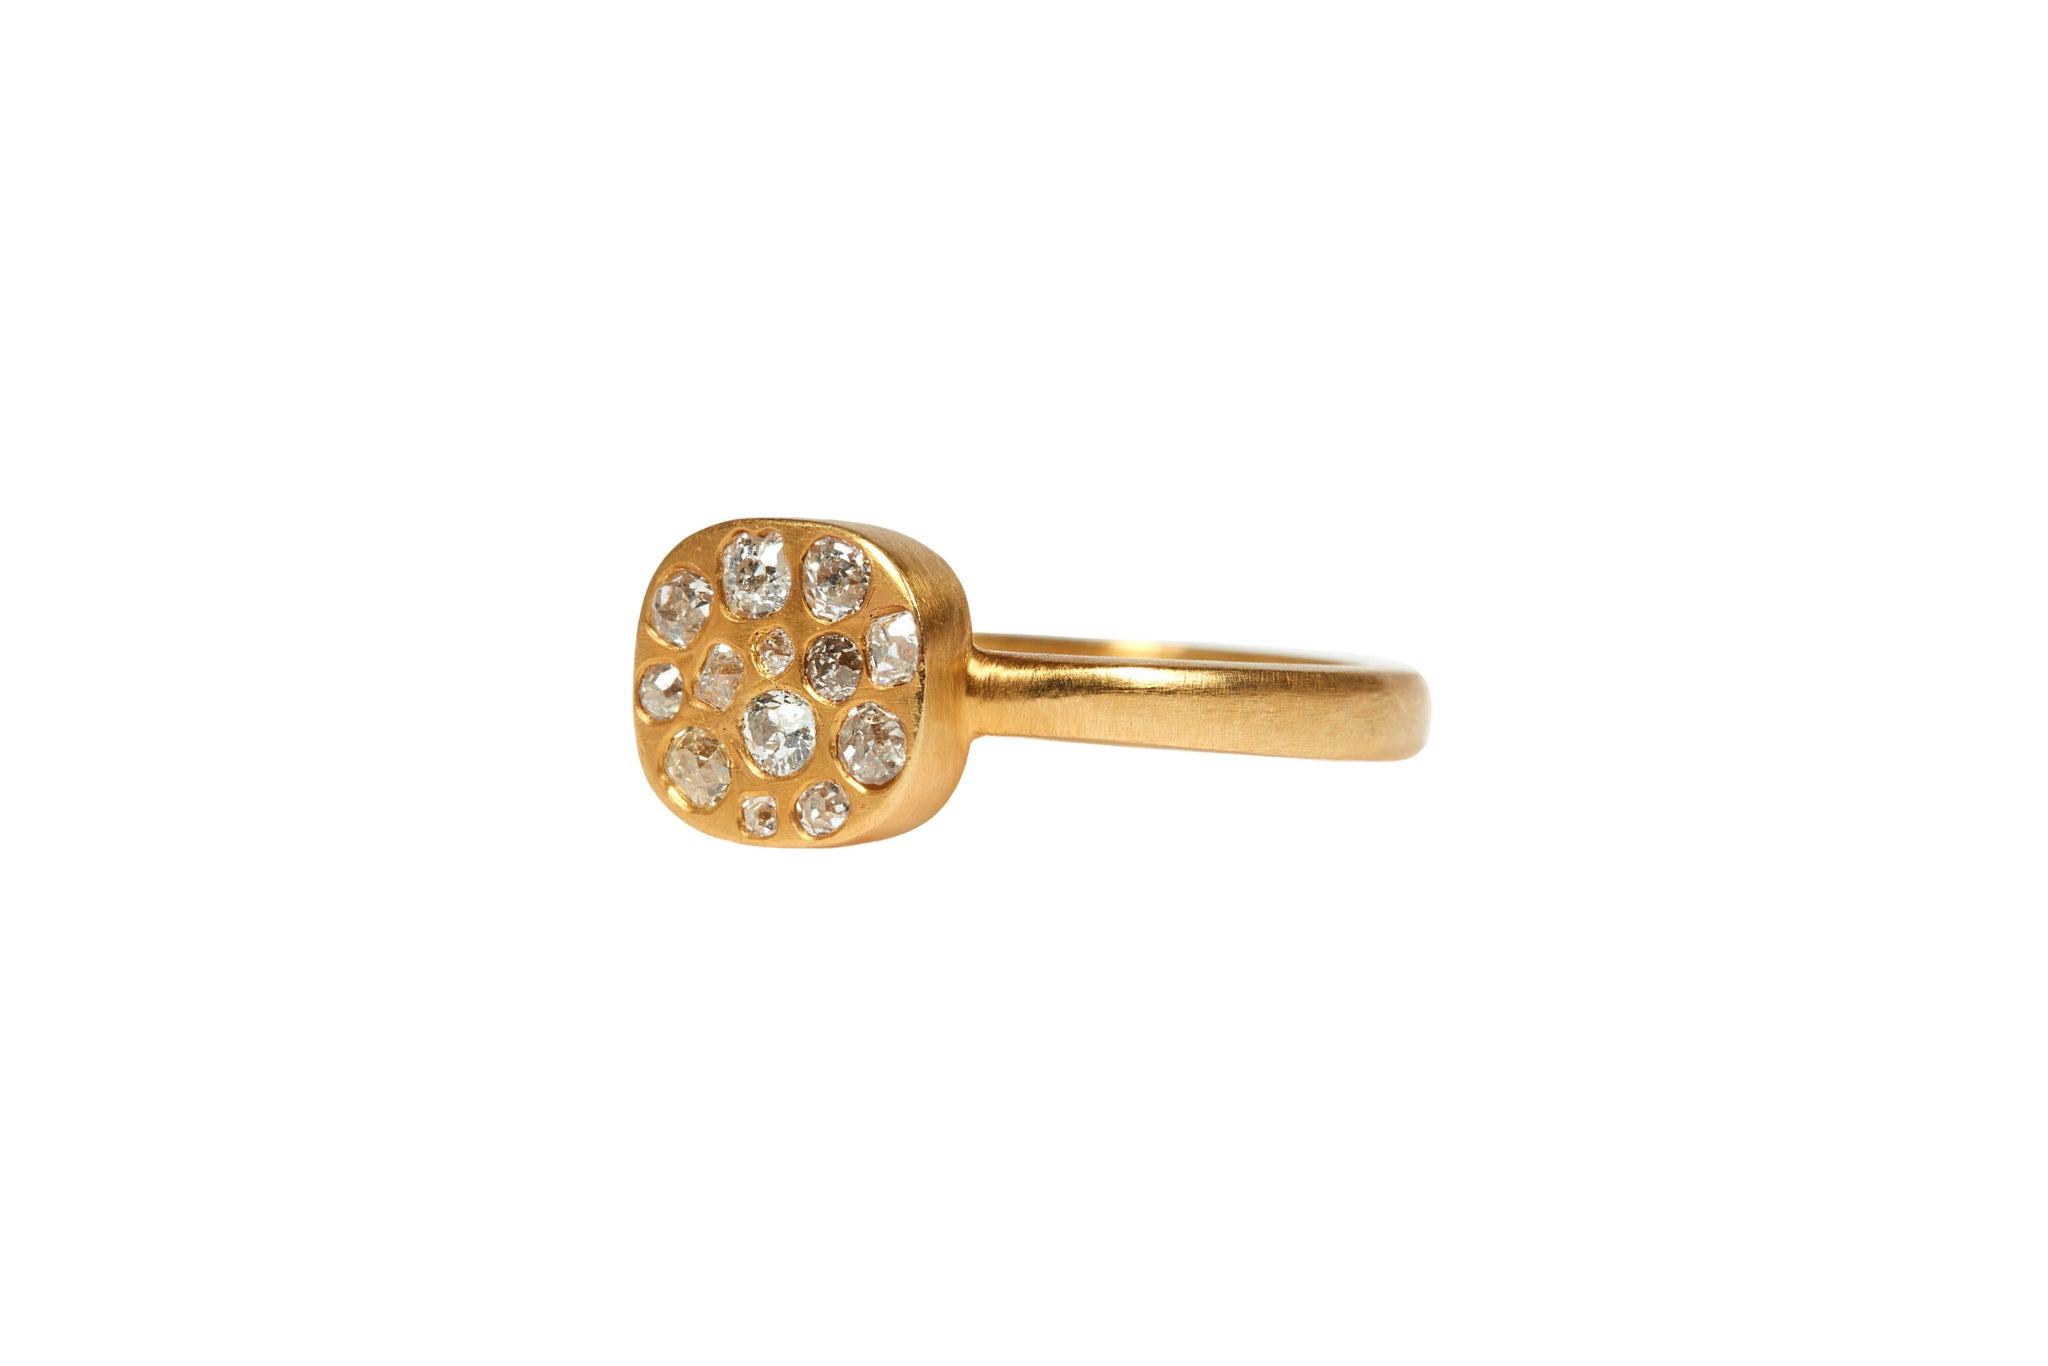 darius jewels hand made fine jewelry diamond signet ring v.3 18k yellow gold antique old mine cut diamonds darius khonsary